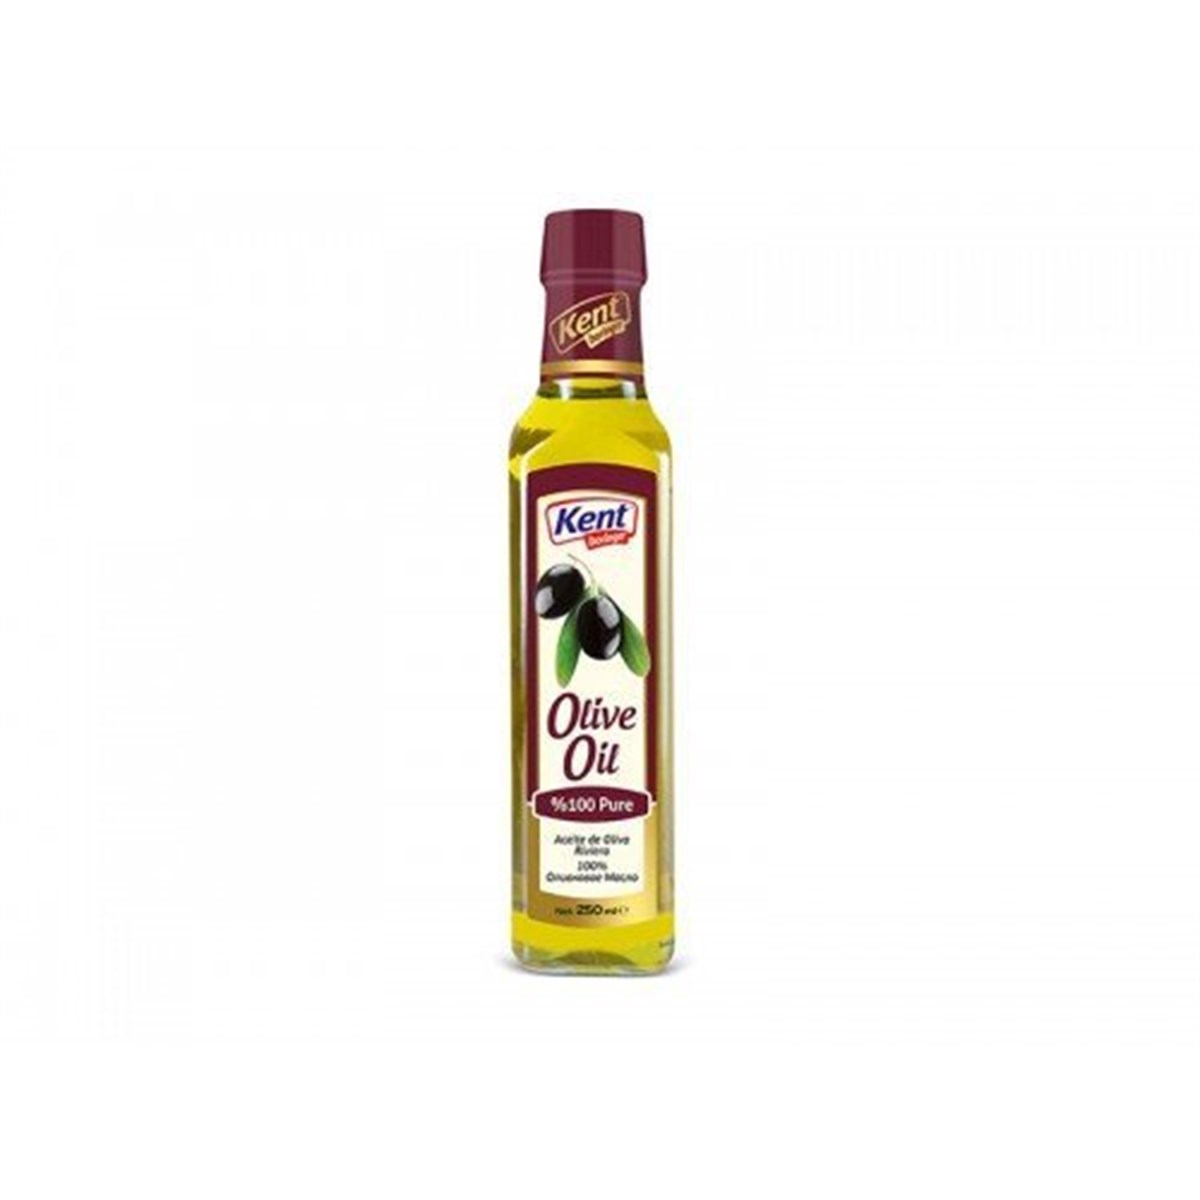 Тесто на оливковом масле. Kent Boringer Extra Virgin оливковое масло 250 мл. Оливковое масло Olive Oil Kent Boringer 250мл. Kent Boringer Pomace оливковое масло 250 мл. ОЛИВКОВОЕ МАСЛО - KENT %100 PURE 500 ML.